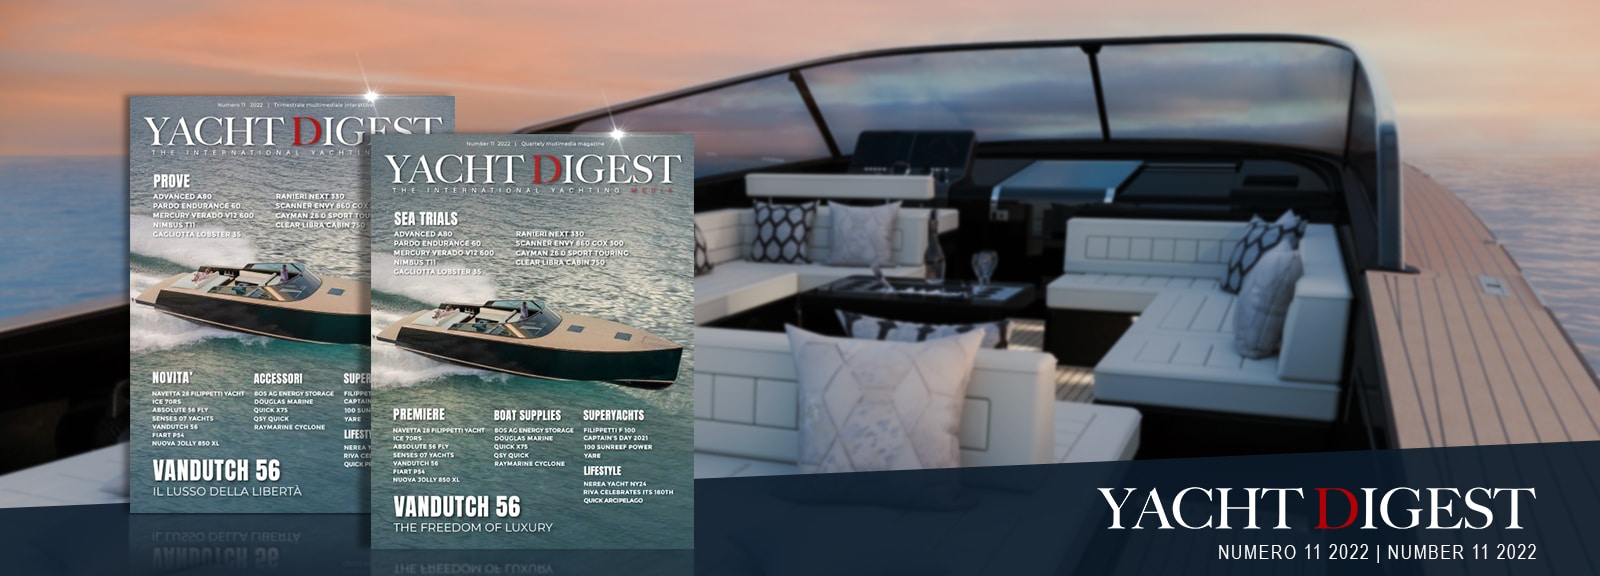 Yacht Digest February 2022